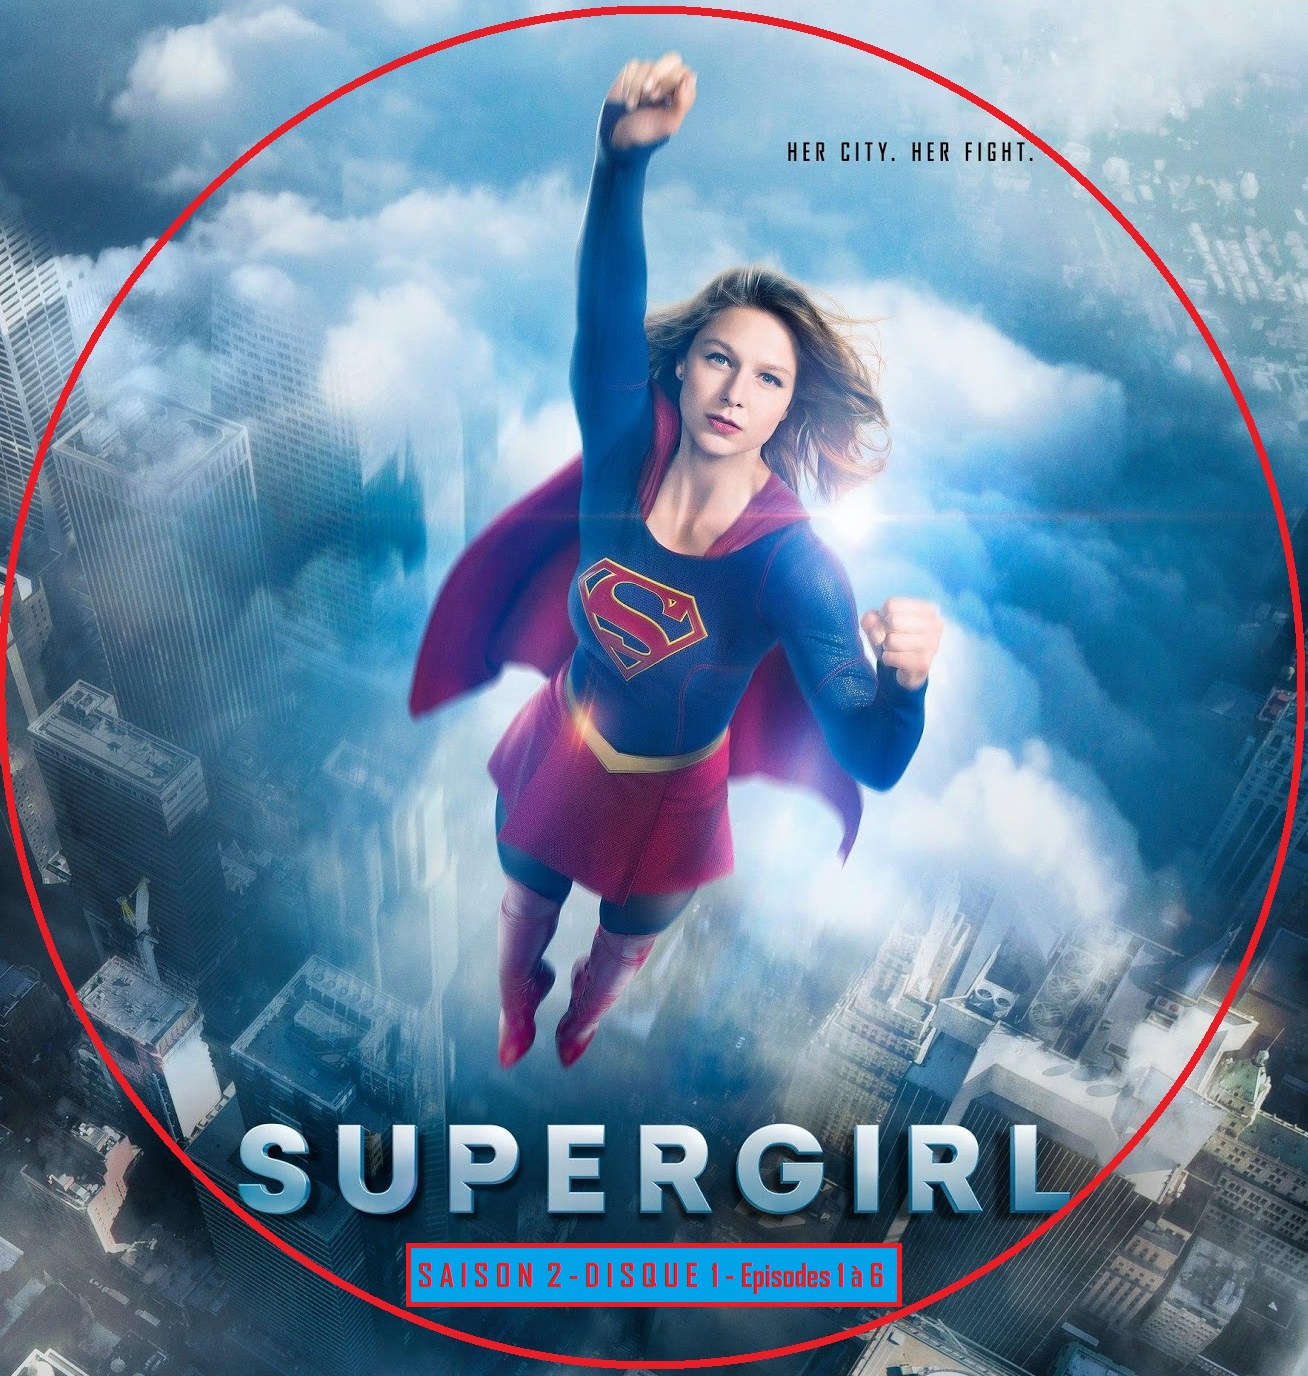 Supergirl saison 2 DISC 1 custom